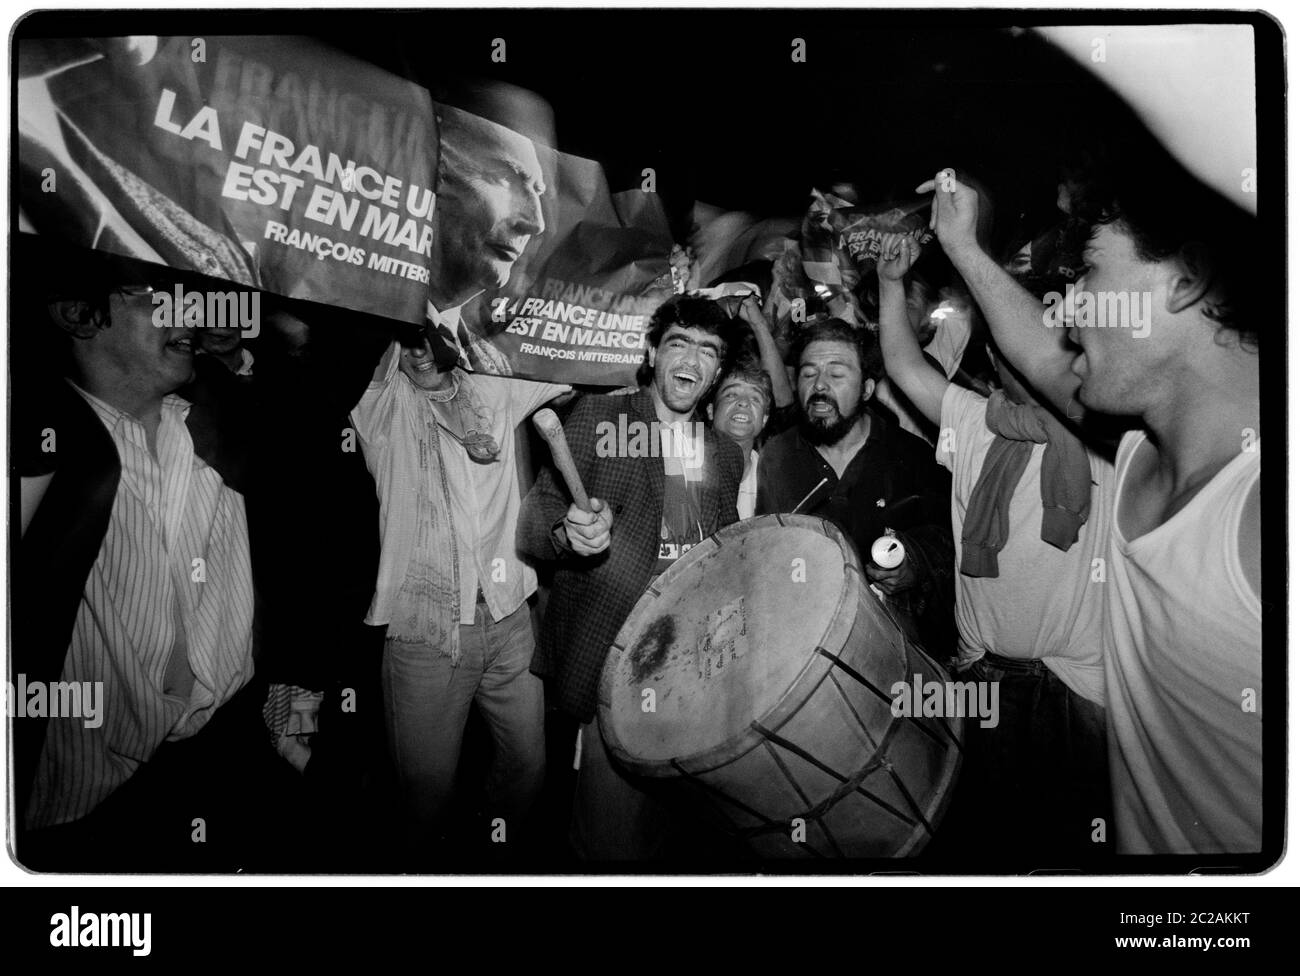 Francois Mitterrand Supporters celebrate his first round victory in Place de la Republic, Paris 1988 Stock Photo